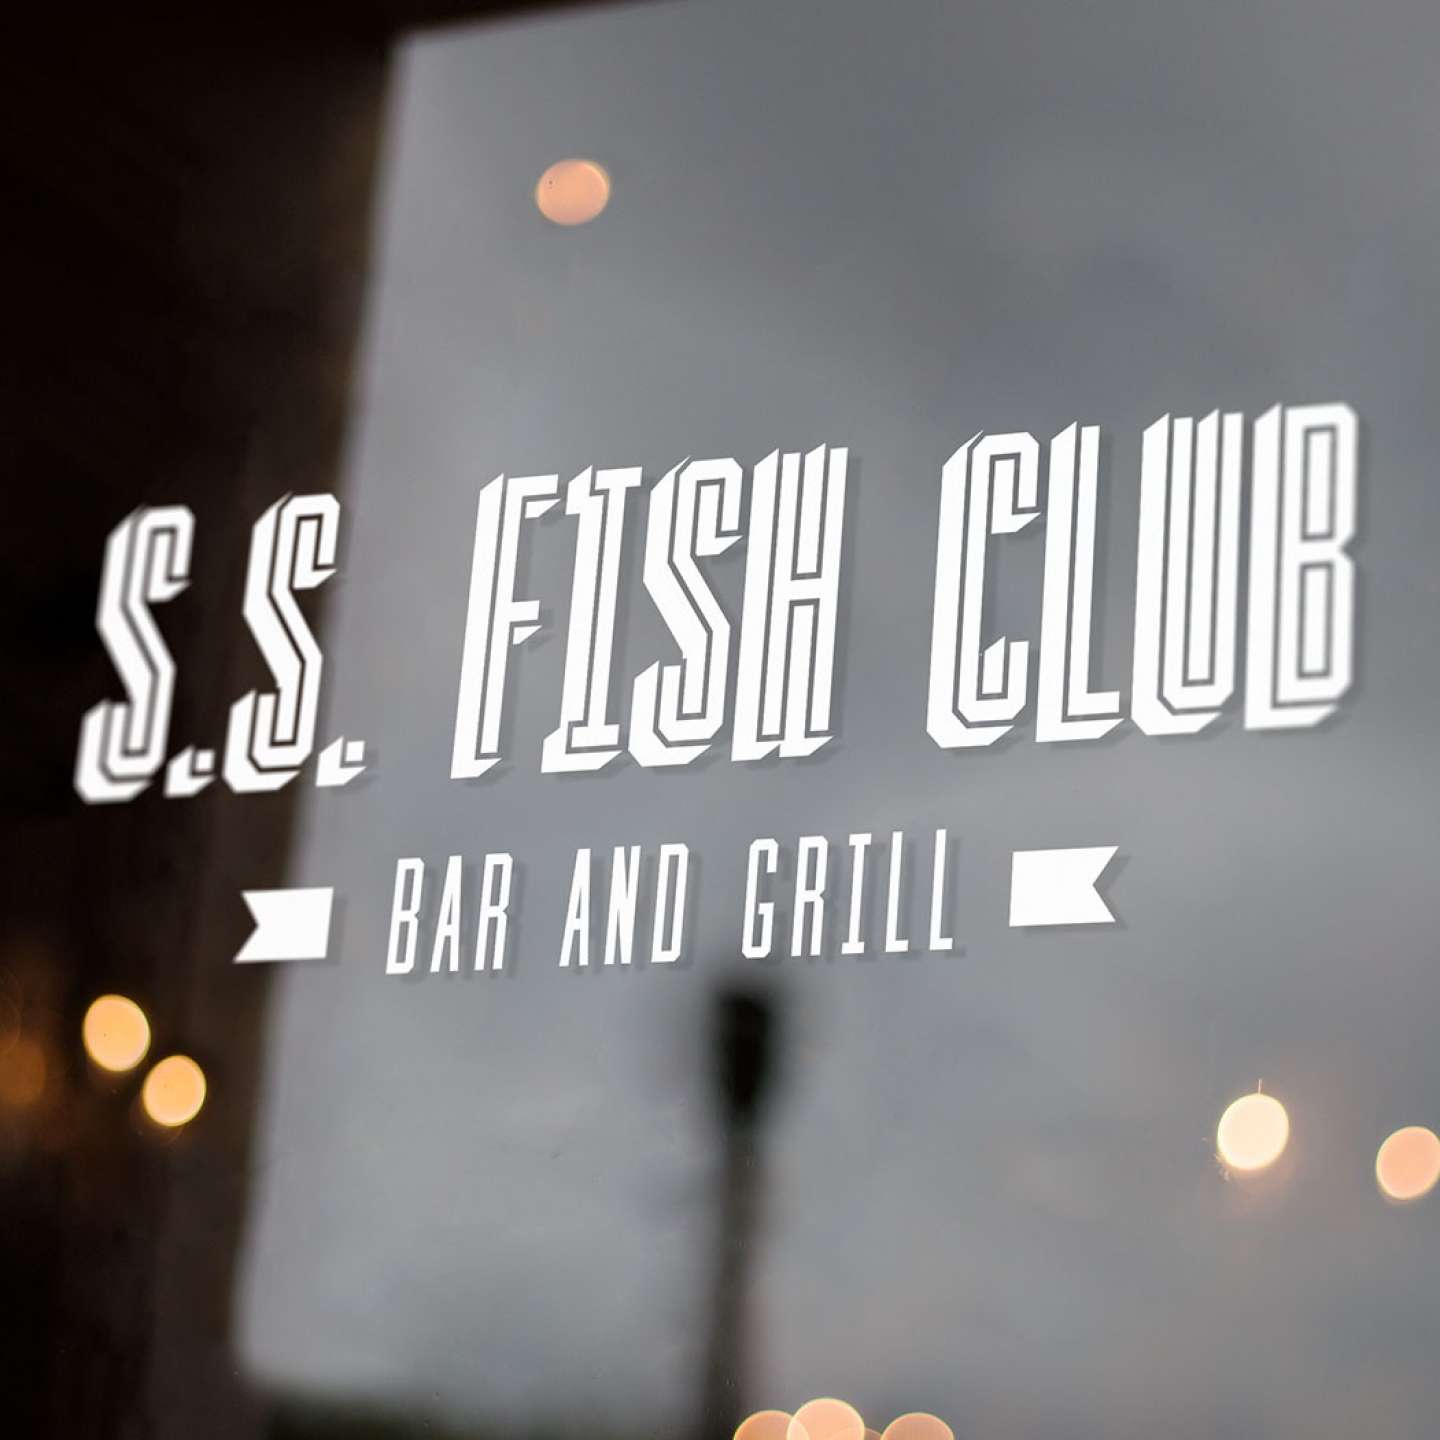 S.S. Fish Club